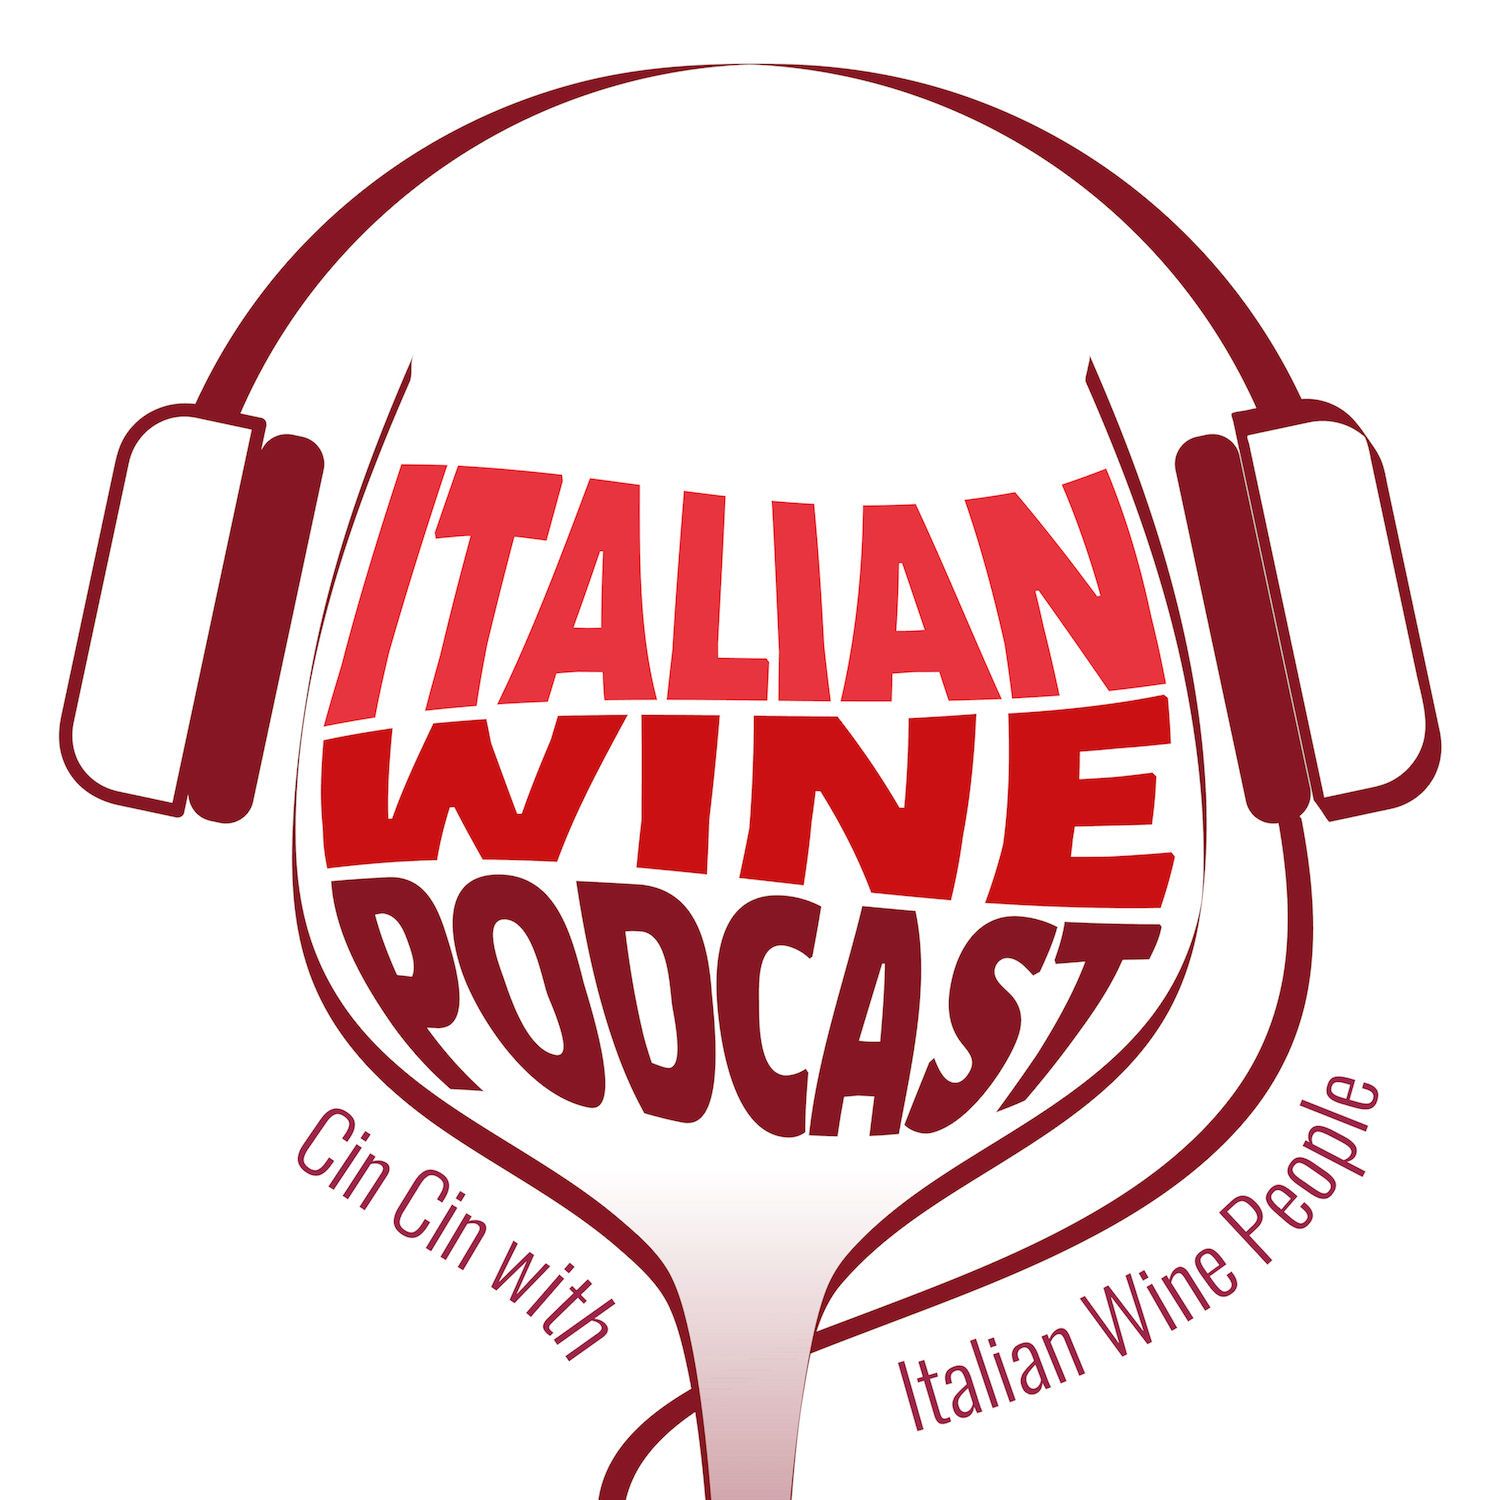 Podcast artwork for Italian Wine Podcast